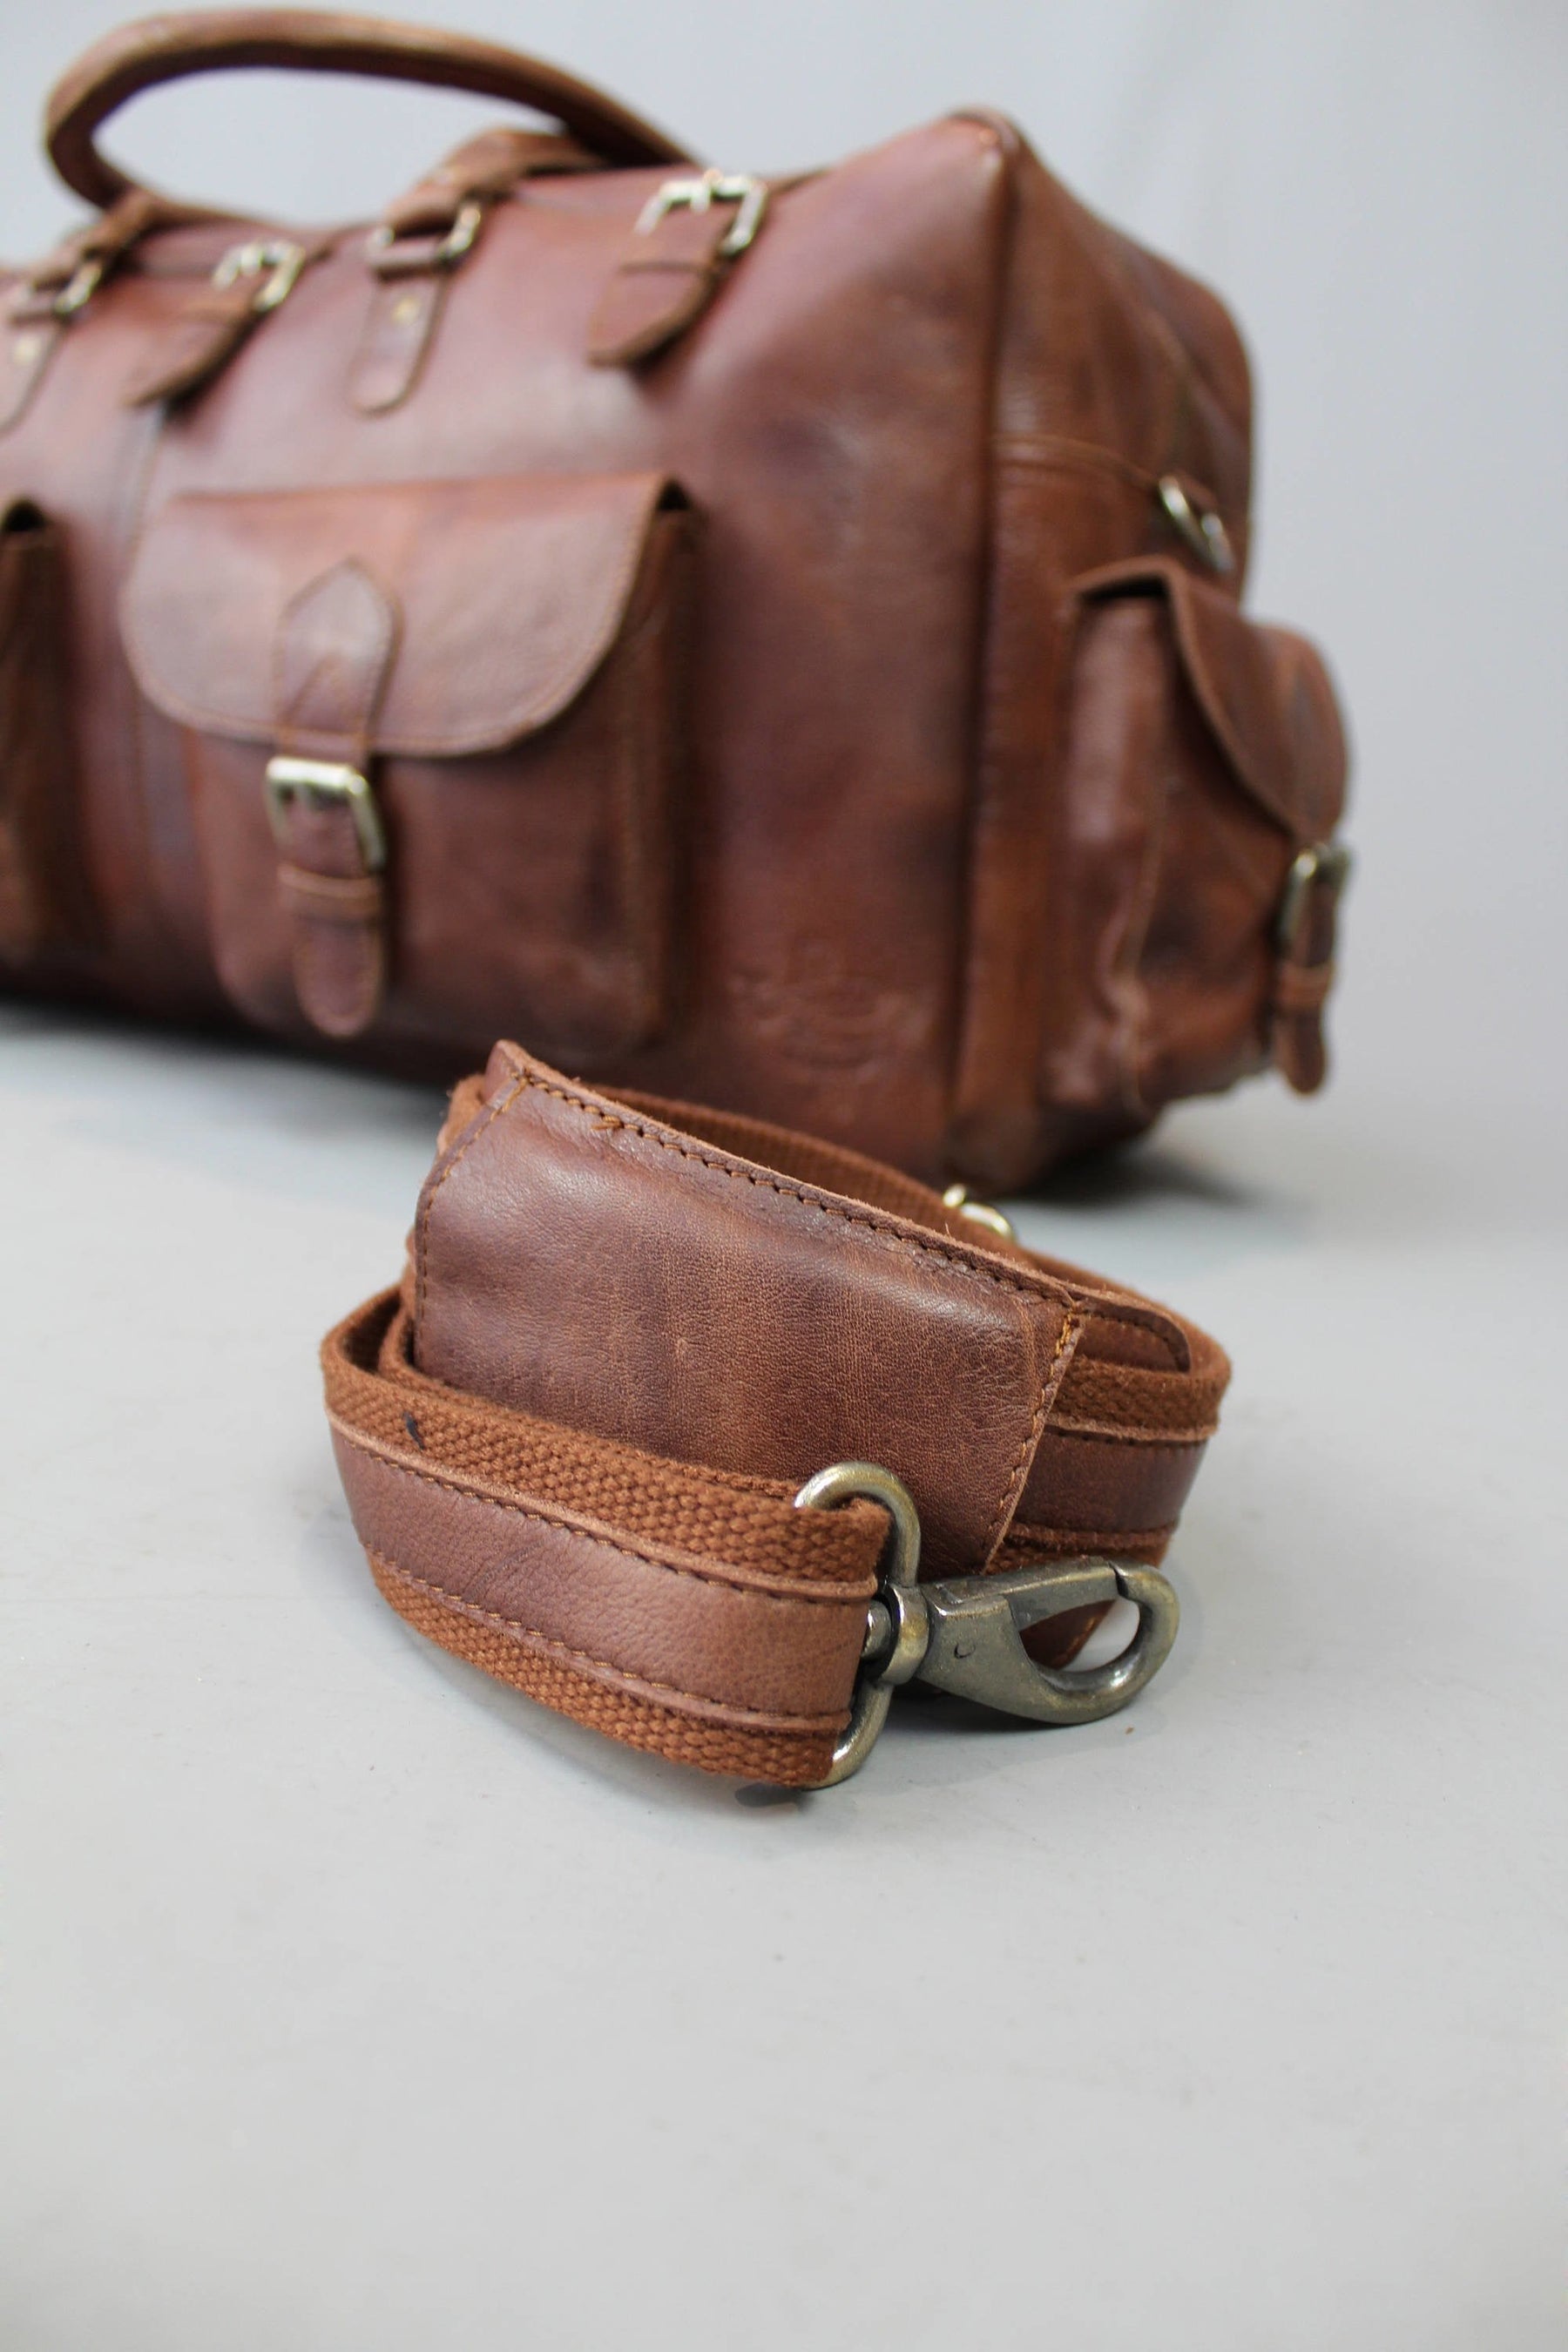 Shriners Travel Bag - Conker Brown Leather - Bricks Masons